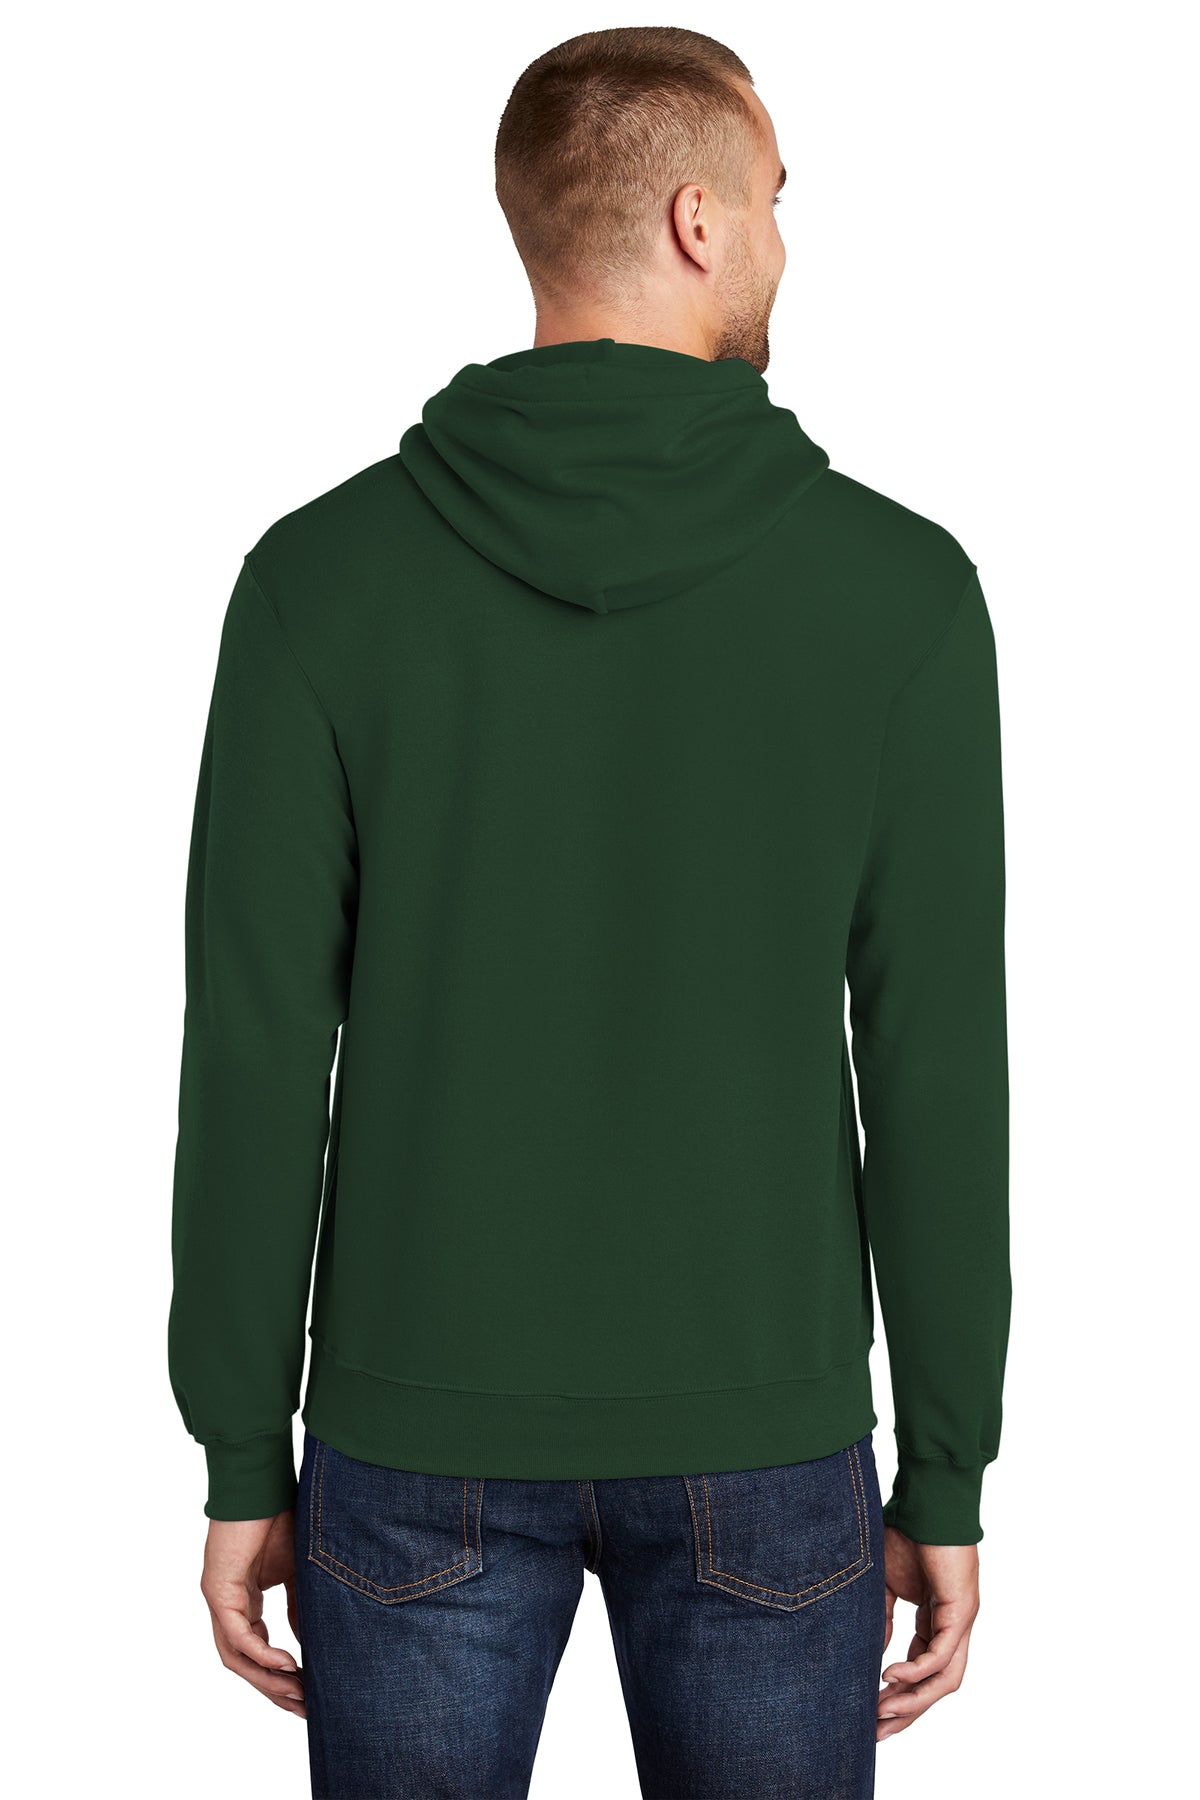 Port & Company PC78H Mens Core Fleece Hooded Sweatshirt Hoodie Dark Green Back